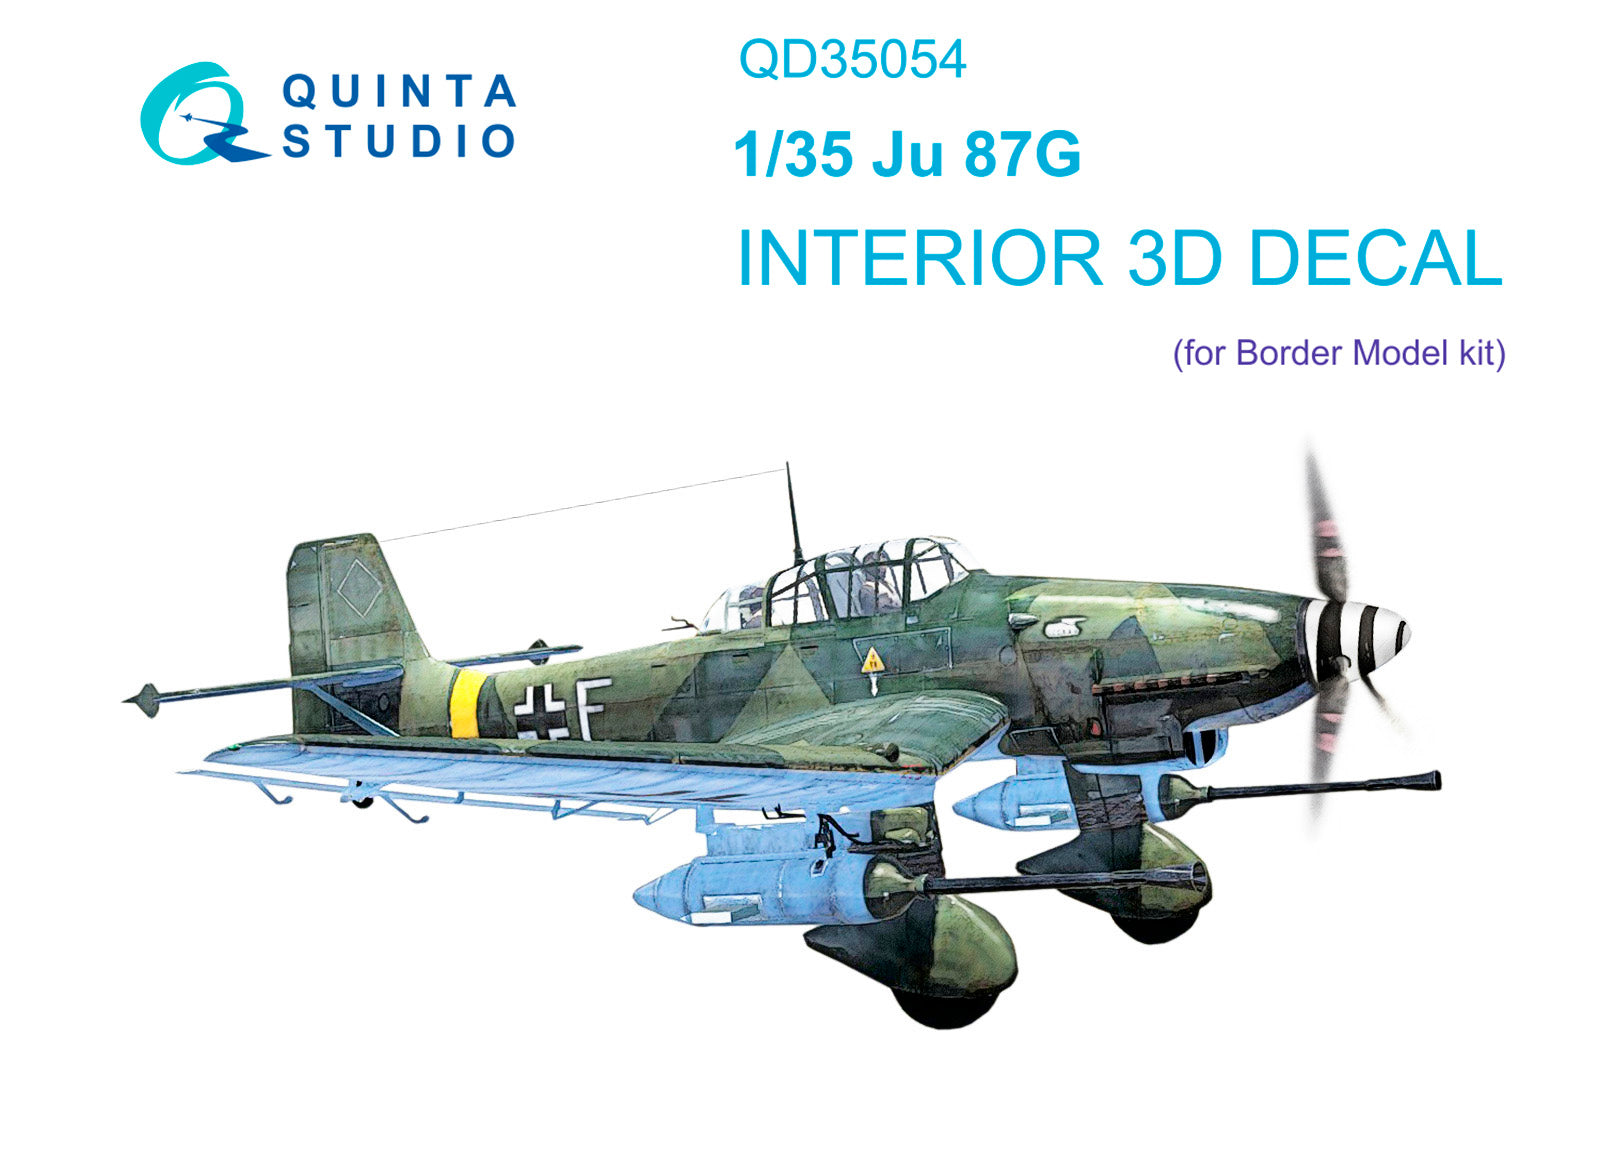 Quinta Studio - 1/35 Ju 87G QD35054 for Border Model kit